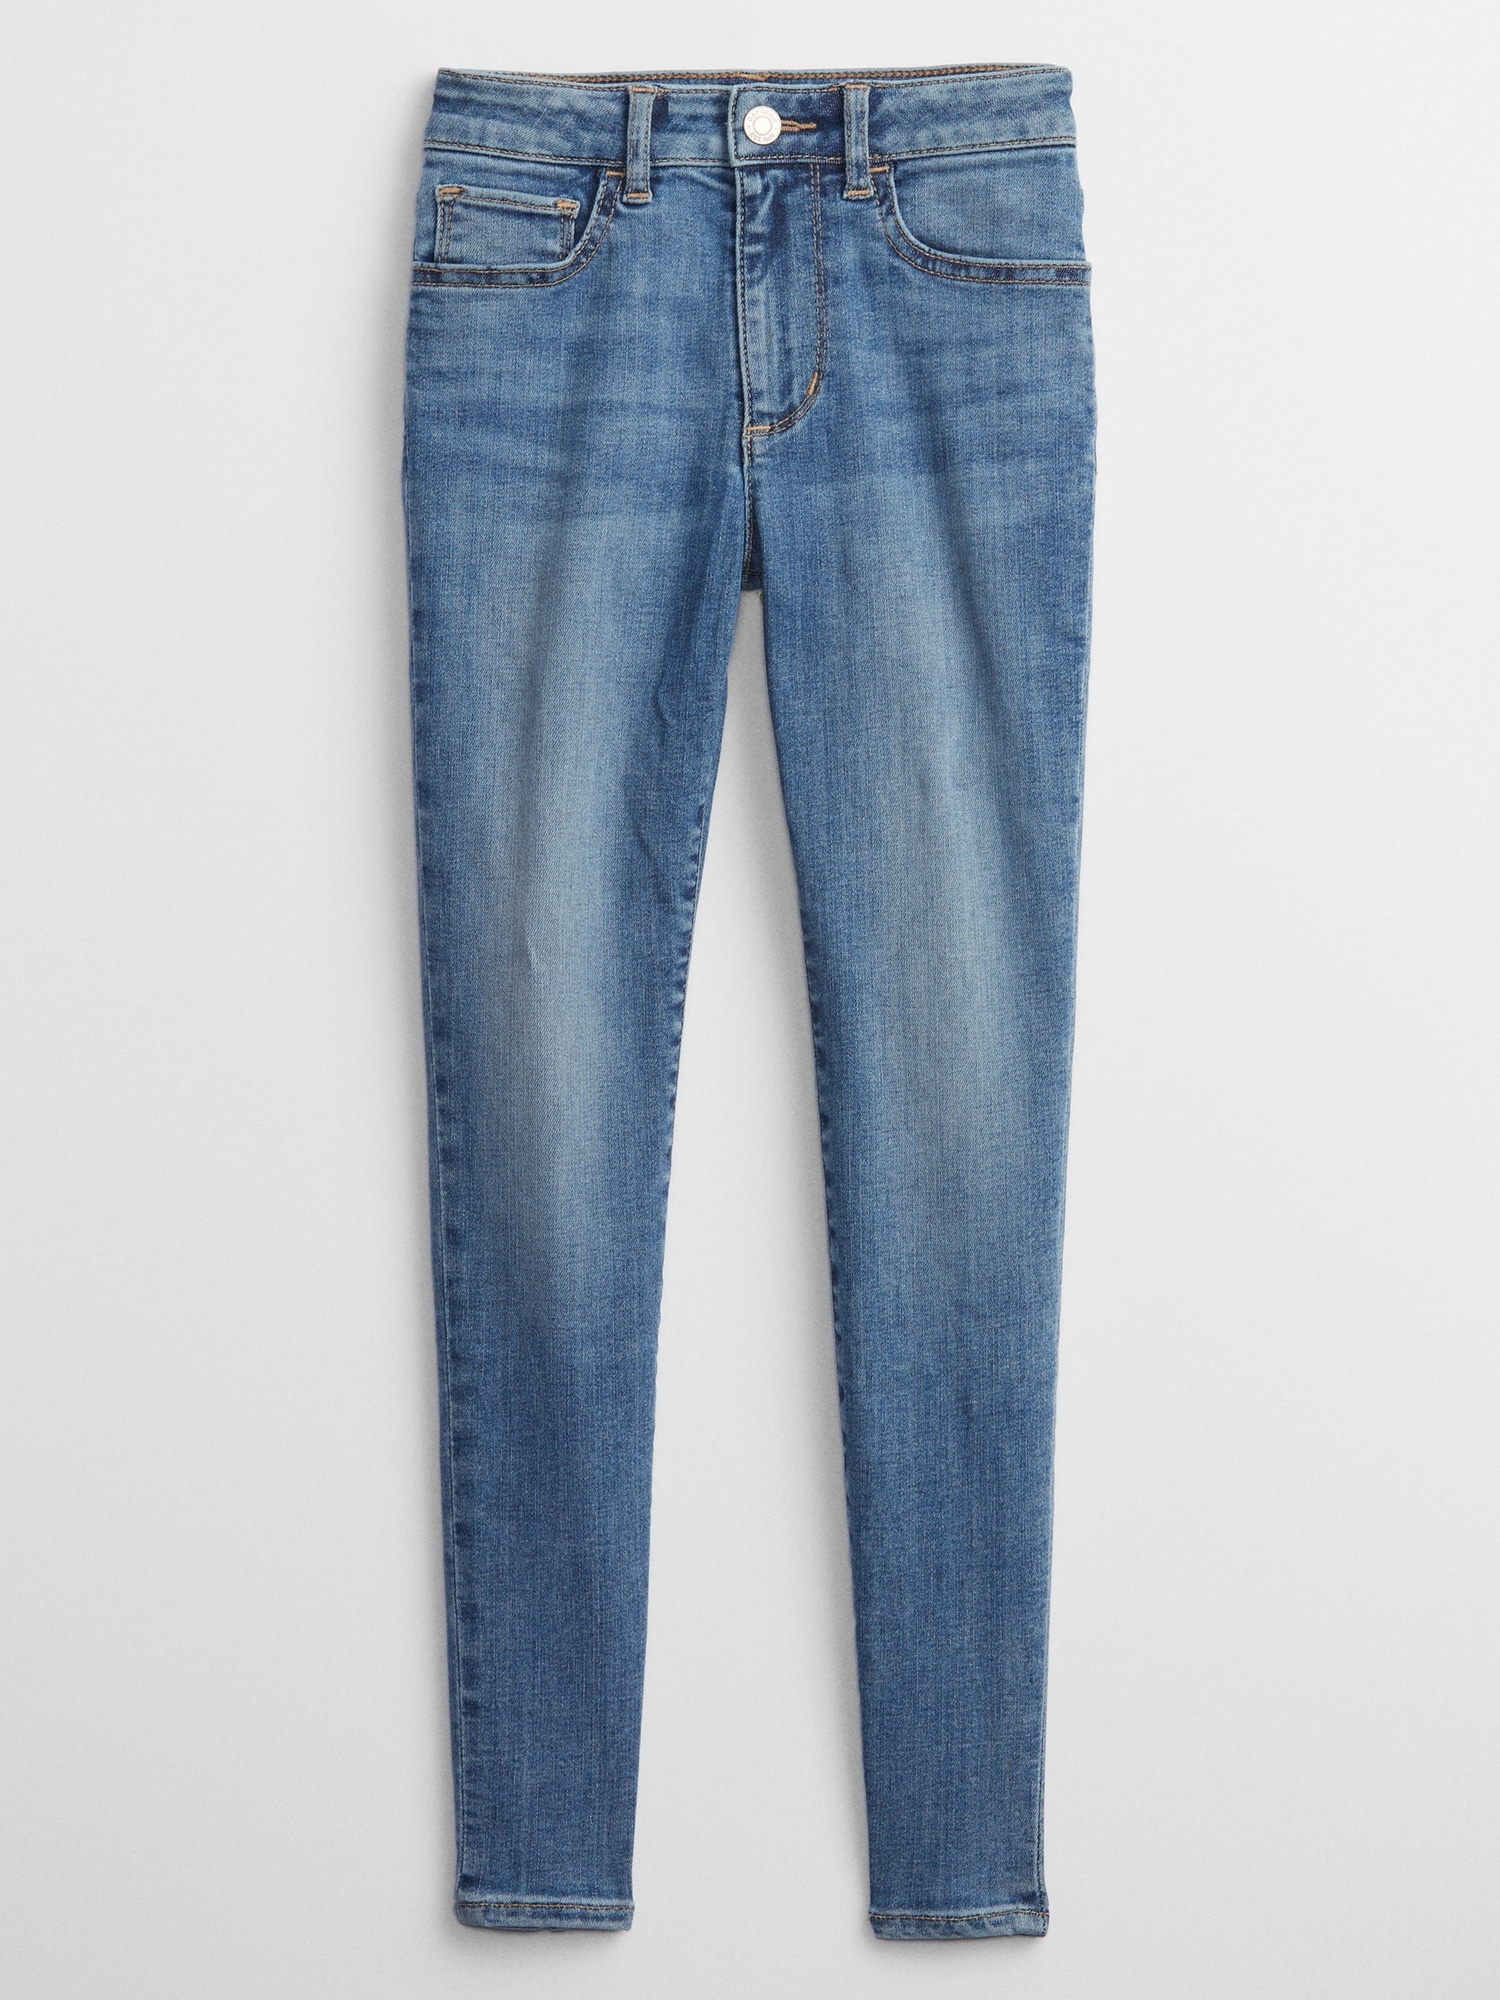 Leggings Jeans for Women Denim Pants with Pocket Slim Jeggings Fitness Plus  Size Leggings S-5XL | Wish